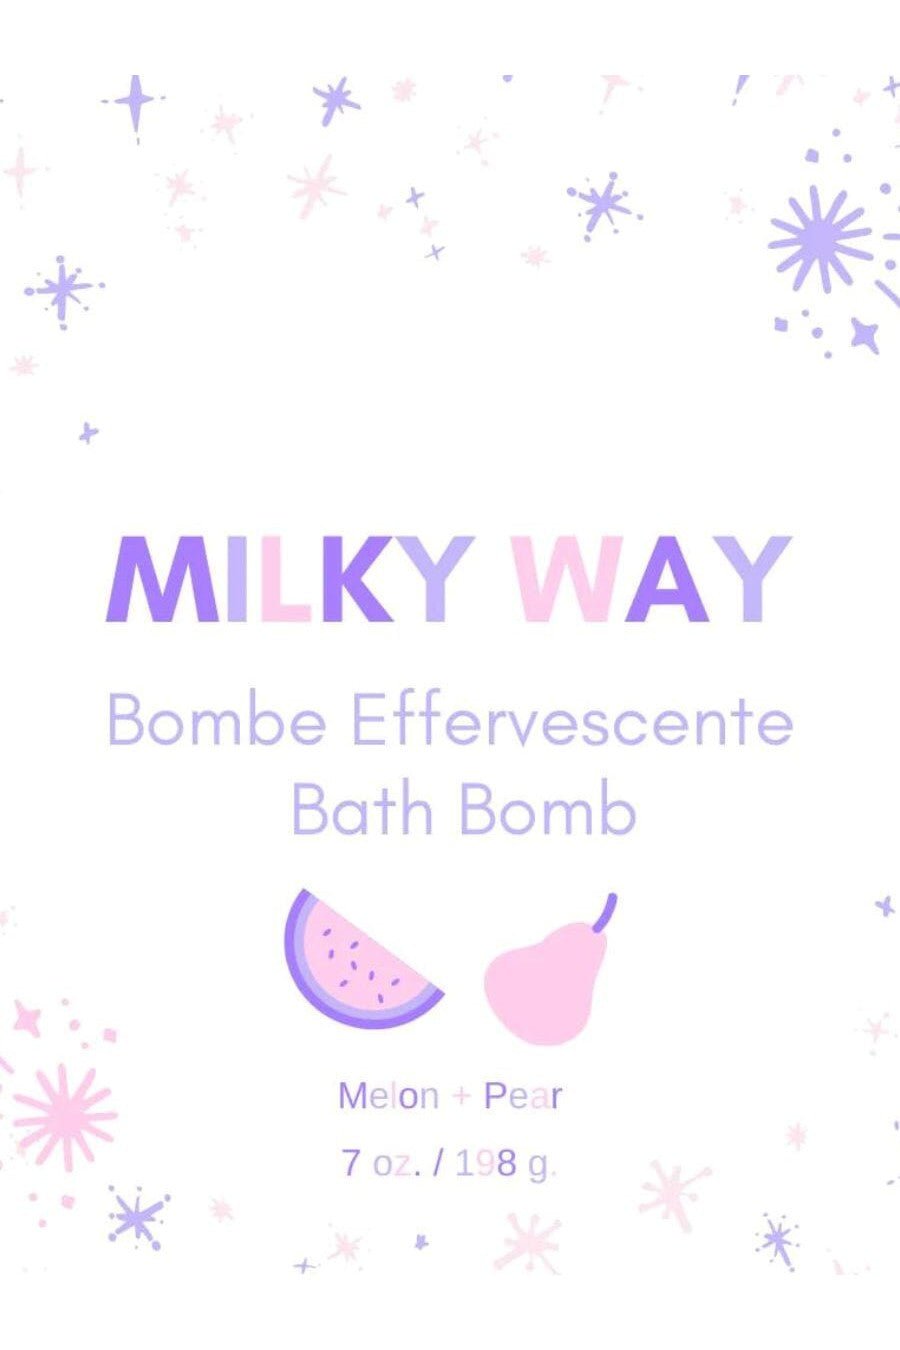 Bombe de bain - Caprice & Co - Milky way Marée - Chandelles 